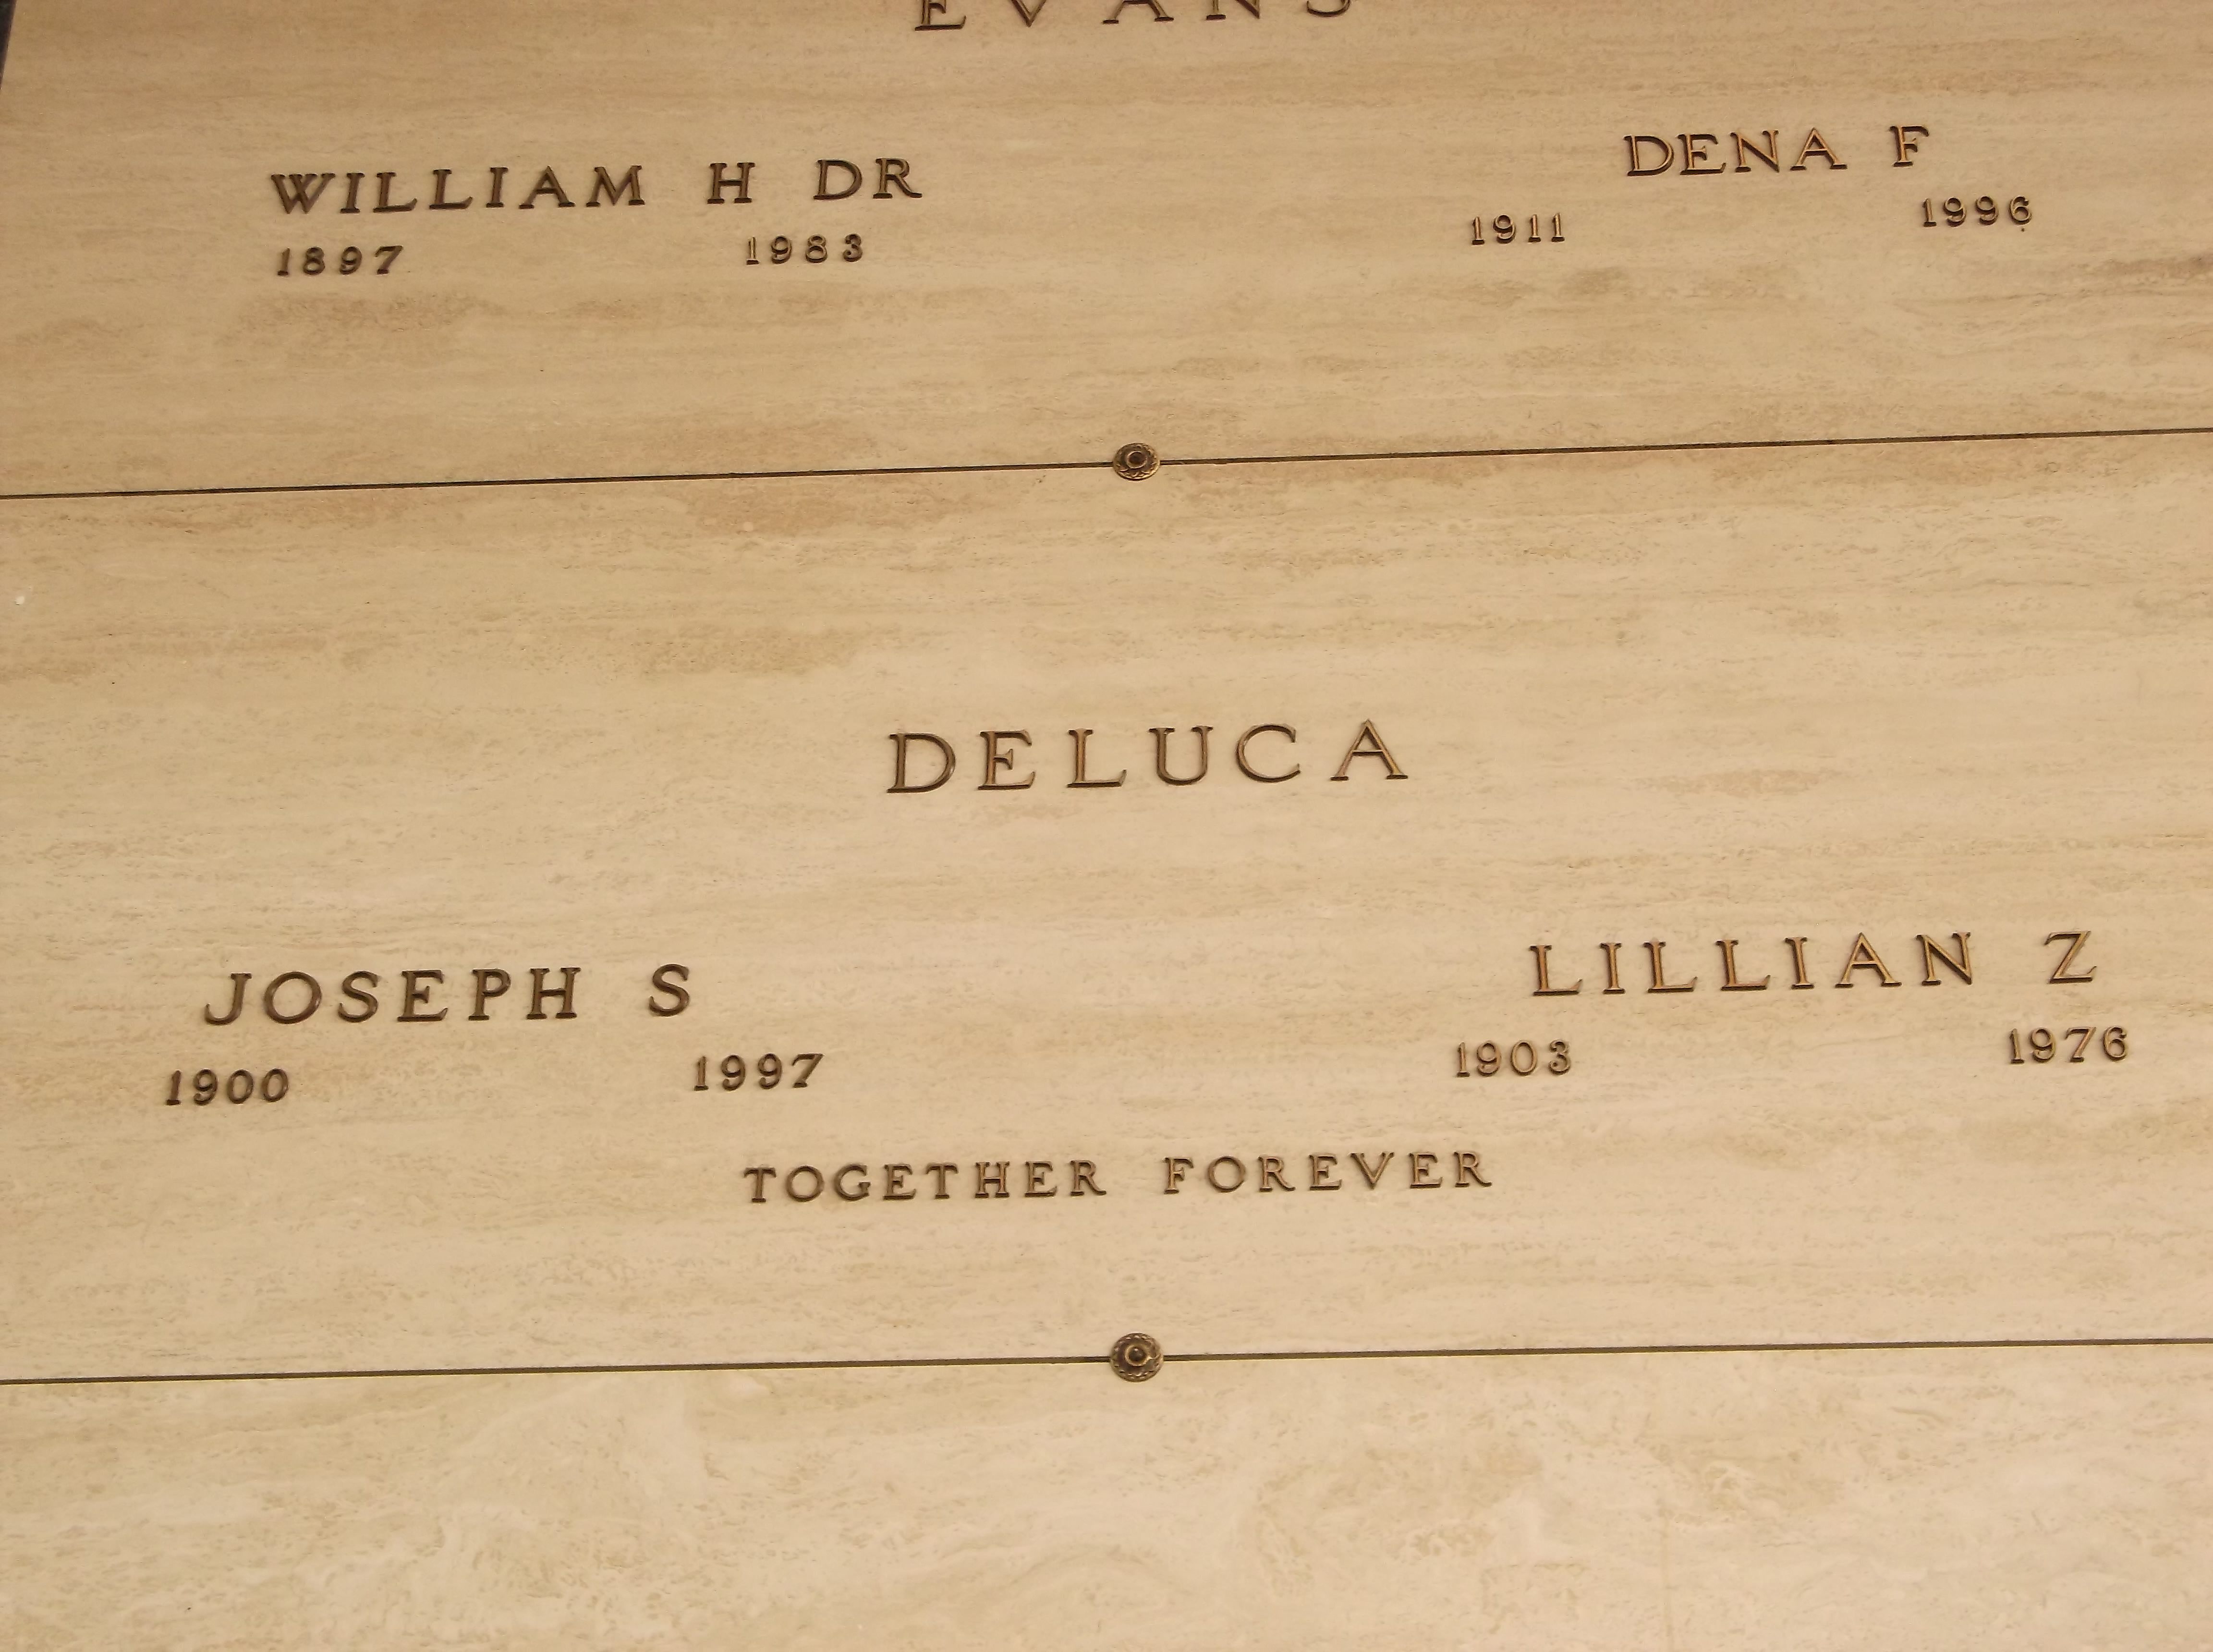 Joseph S Deluca